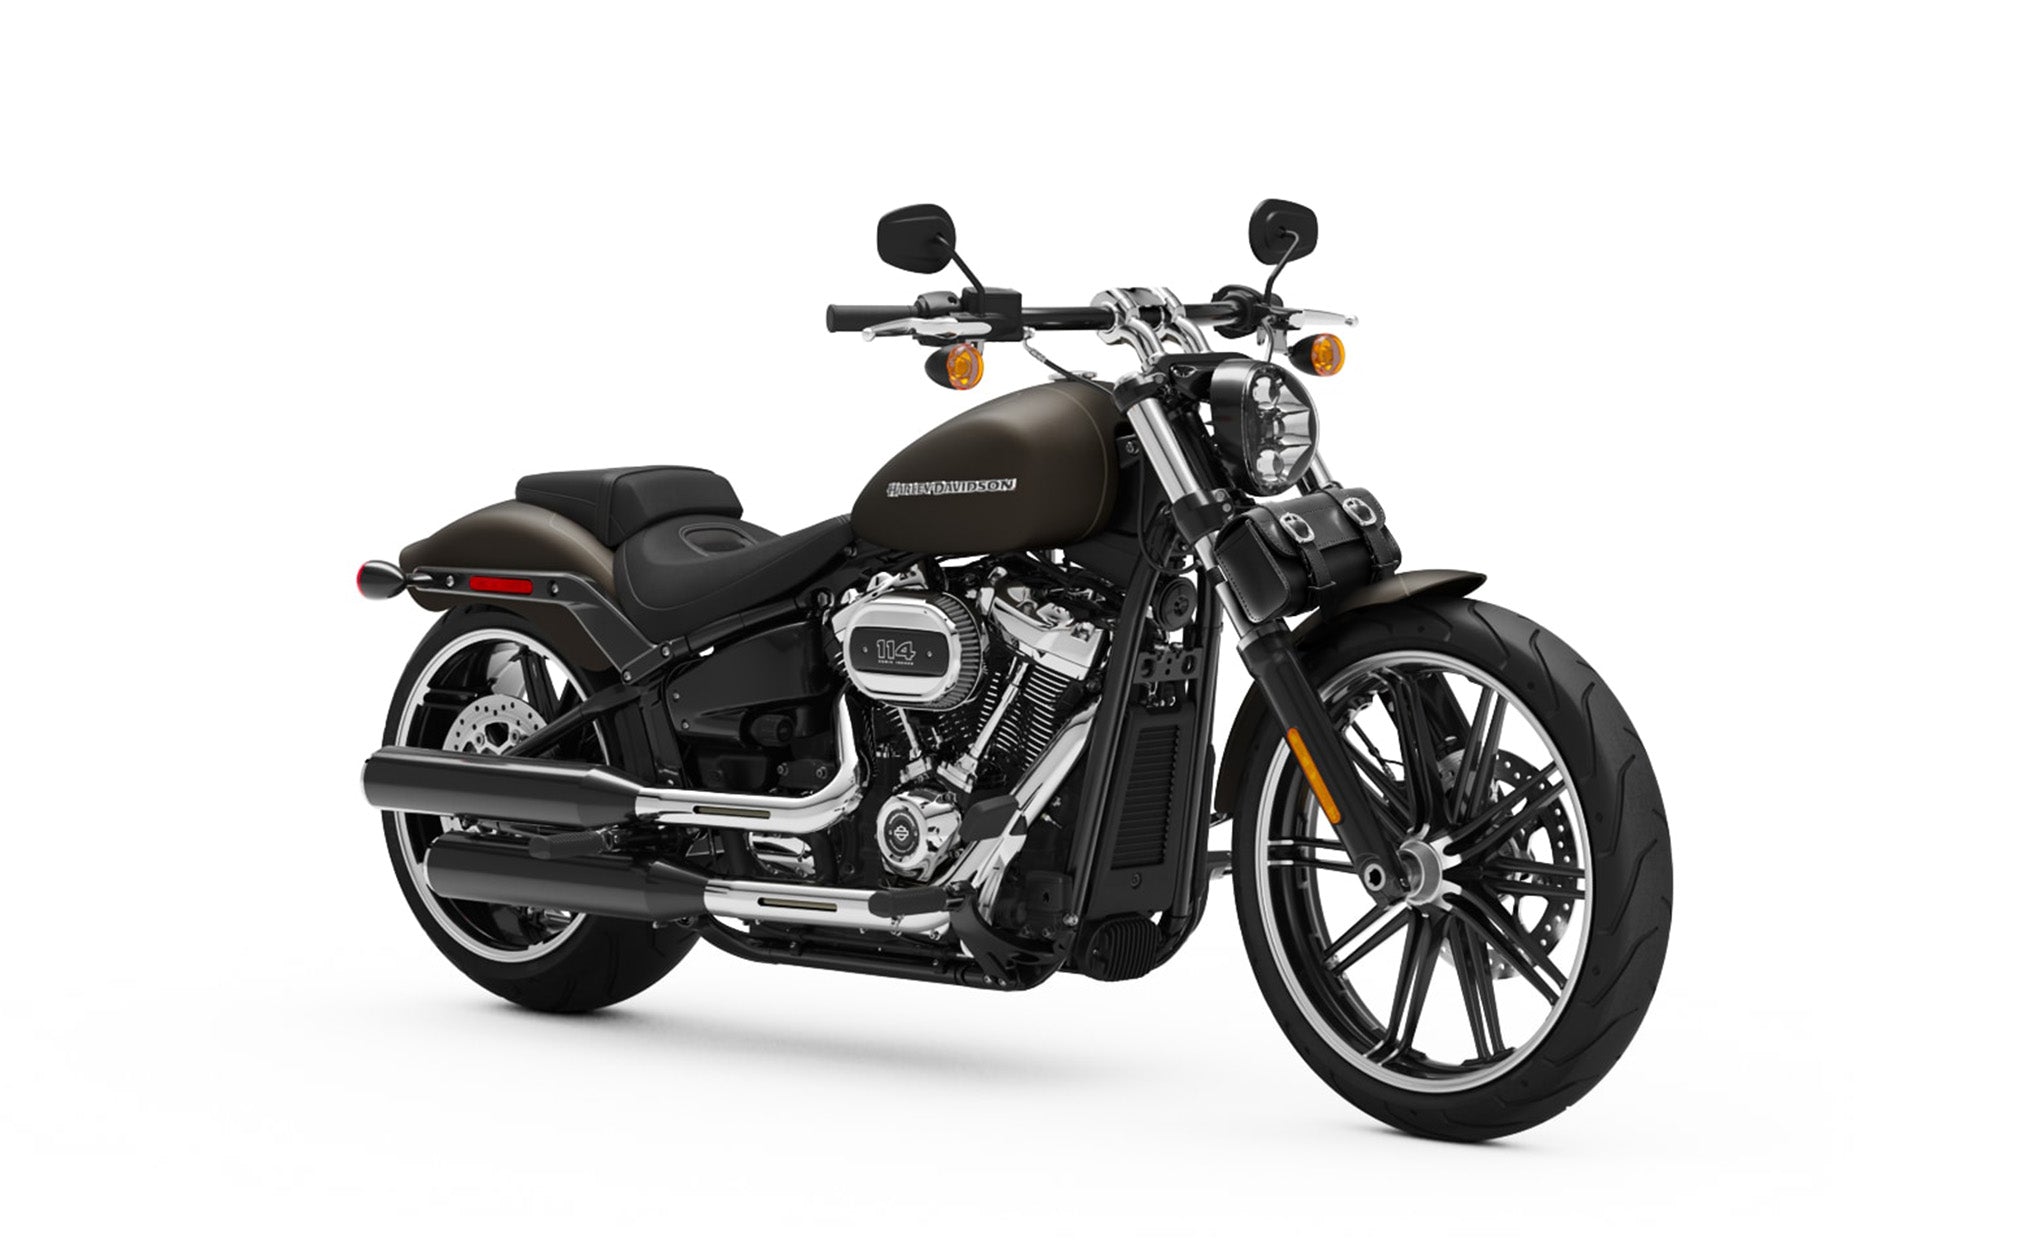 Viking Armor Plain Leather Motorcycle Handlebar Bag for Harley Davidson Bag on Bike View @expand